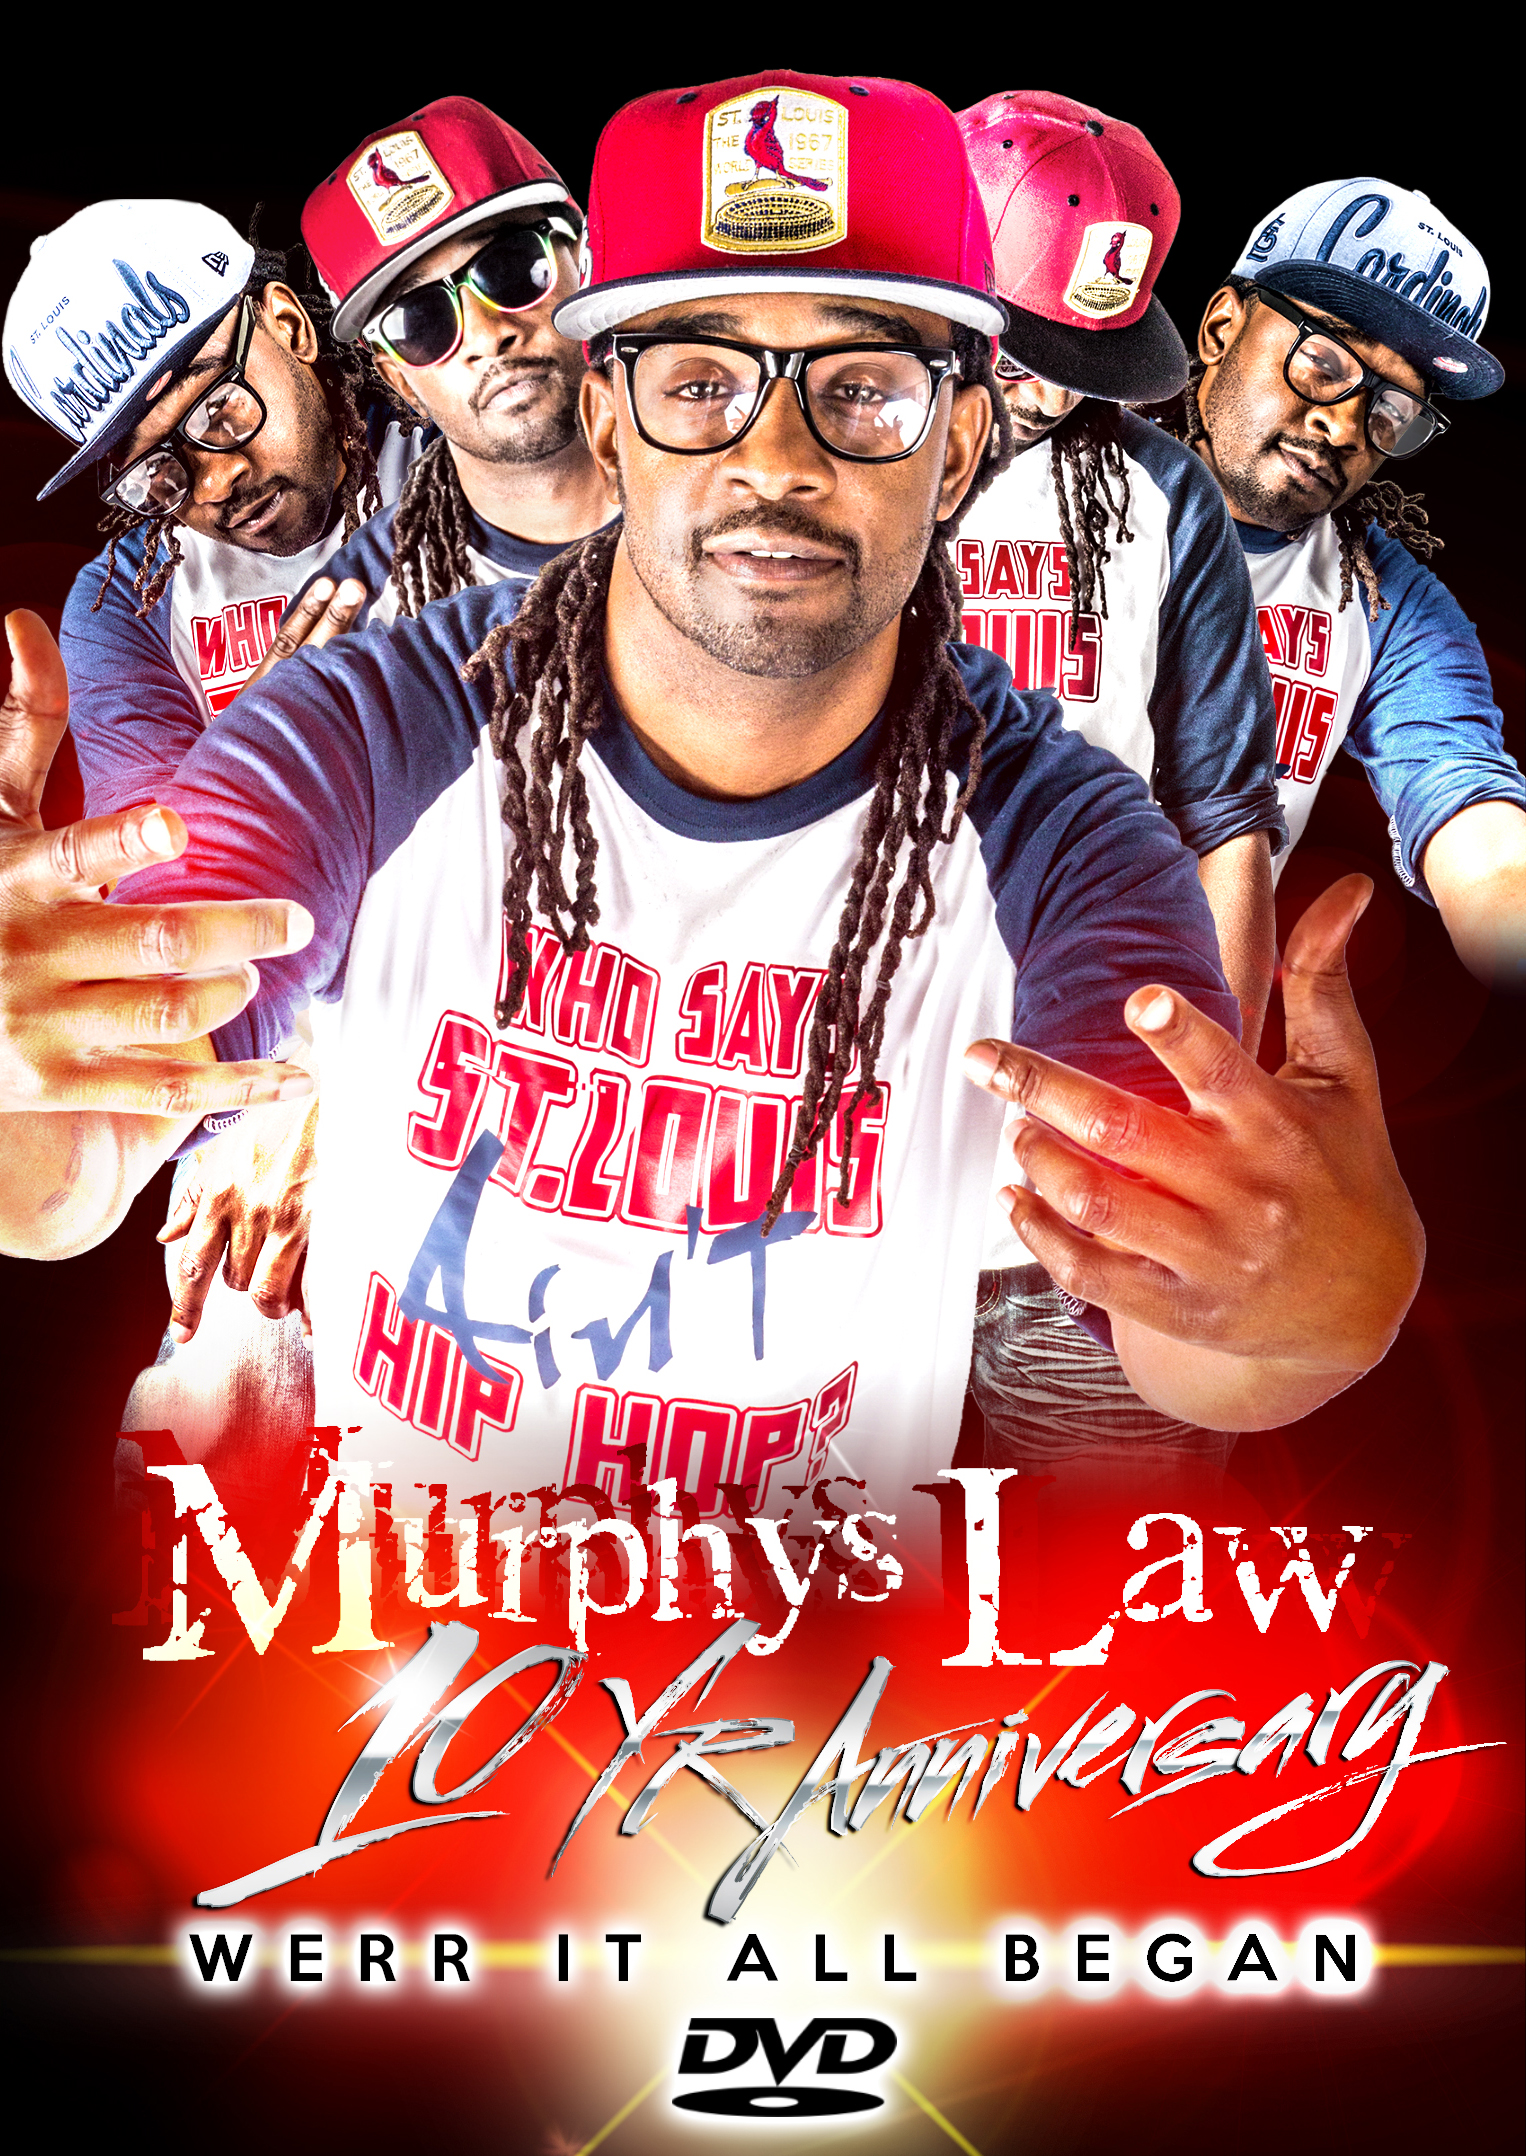 Murphy's Law Documentary